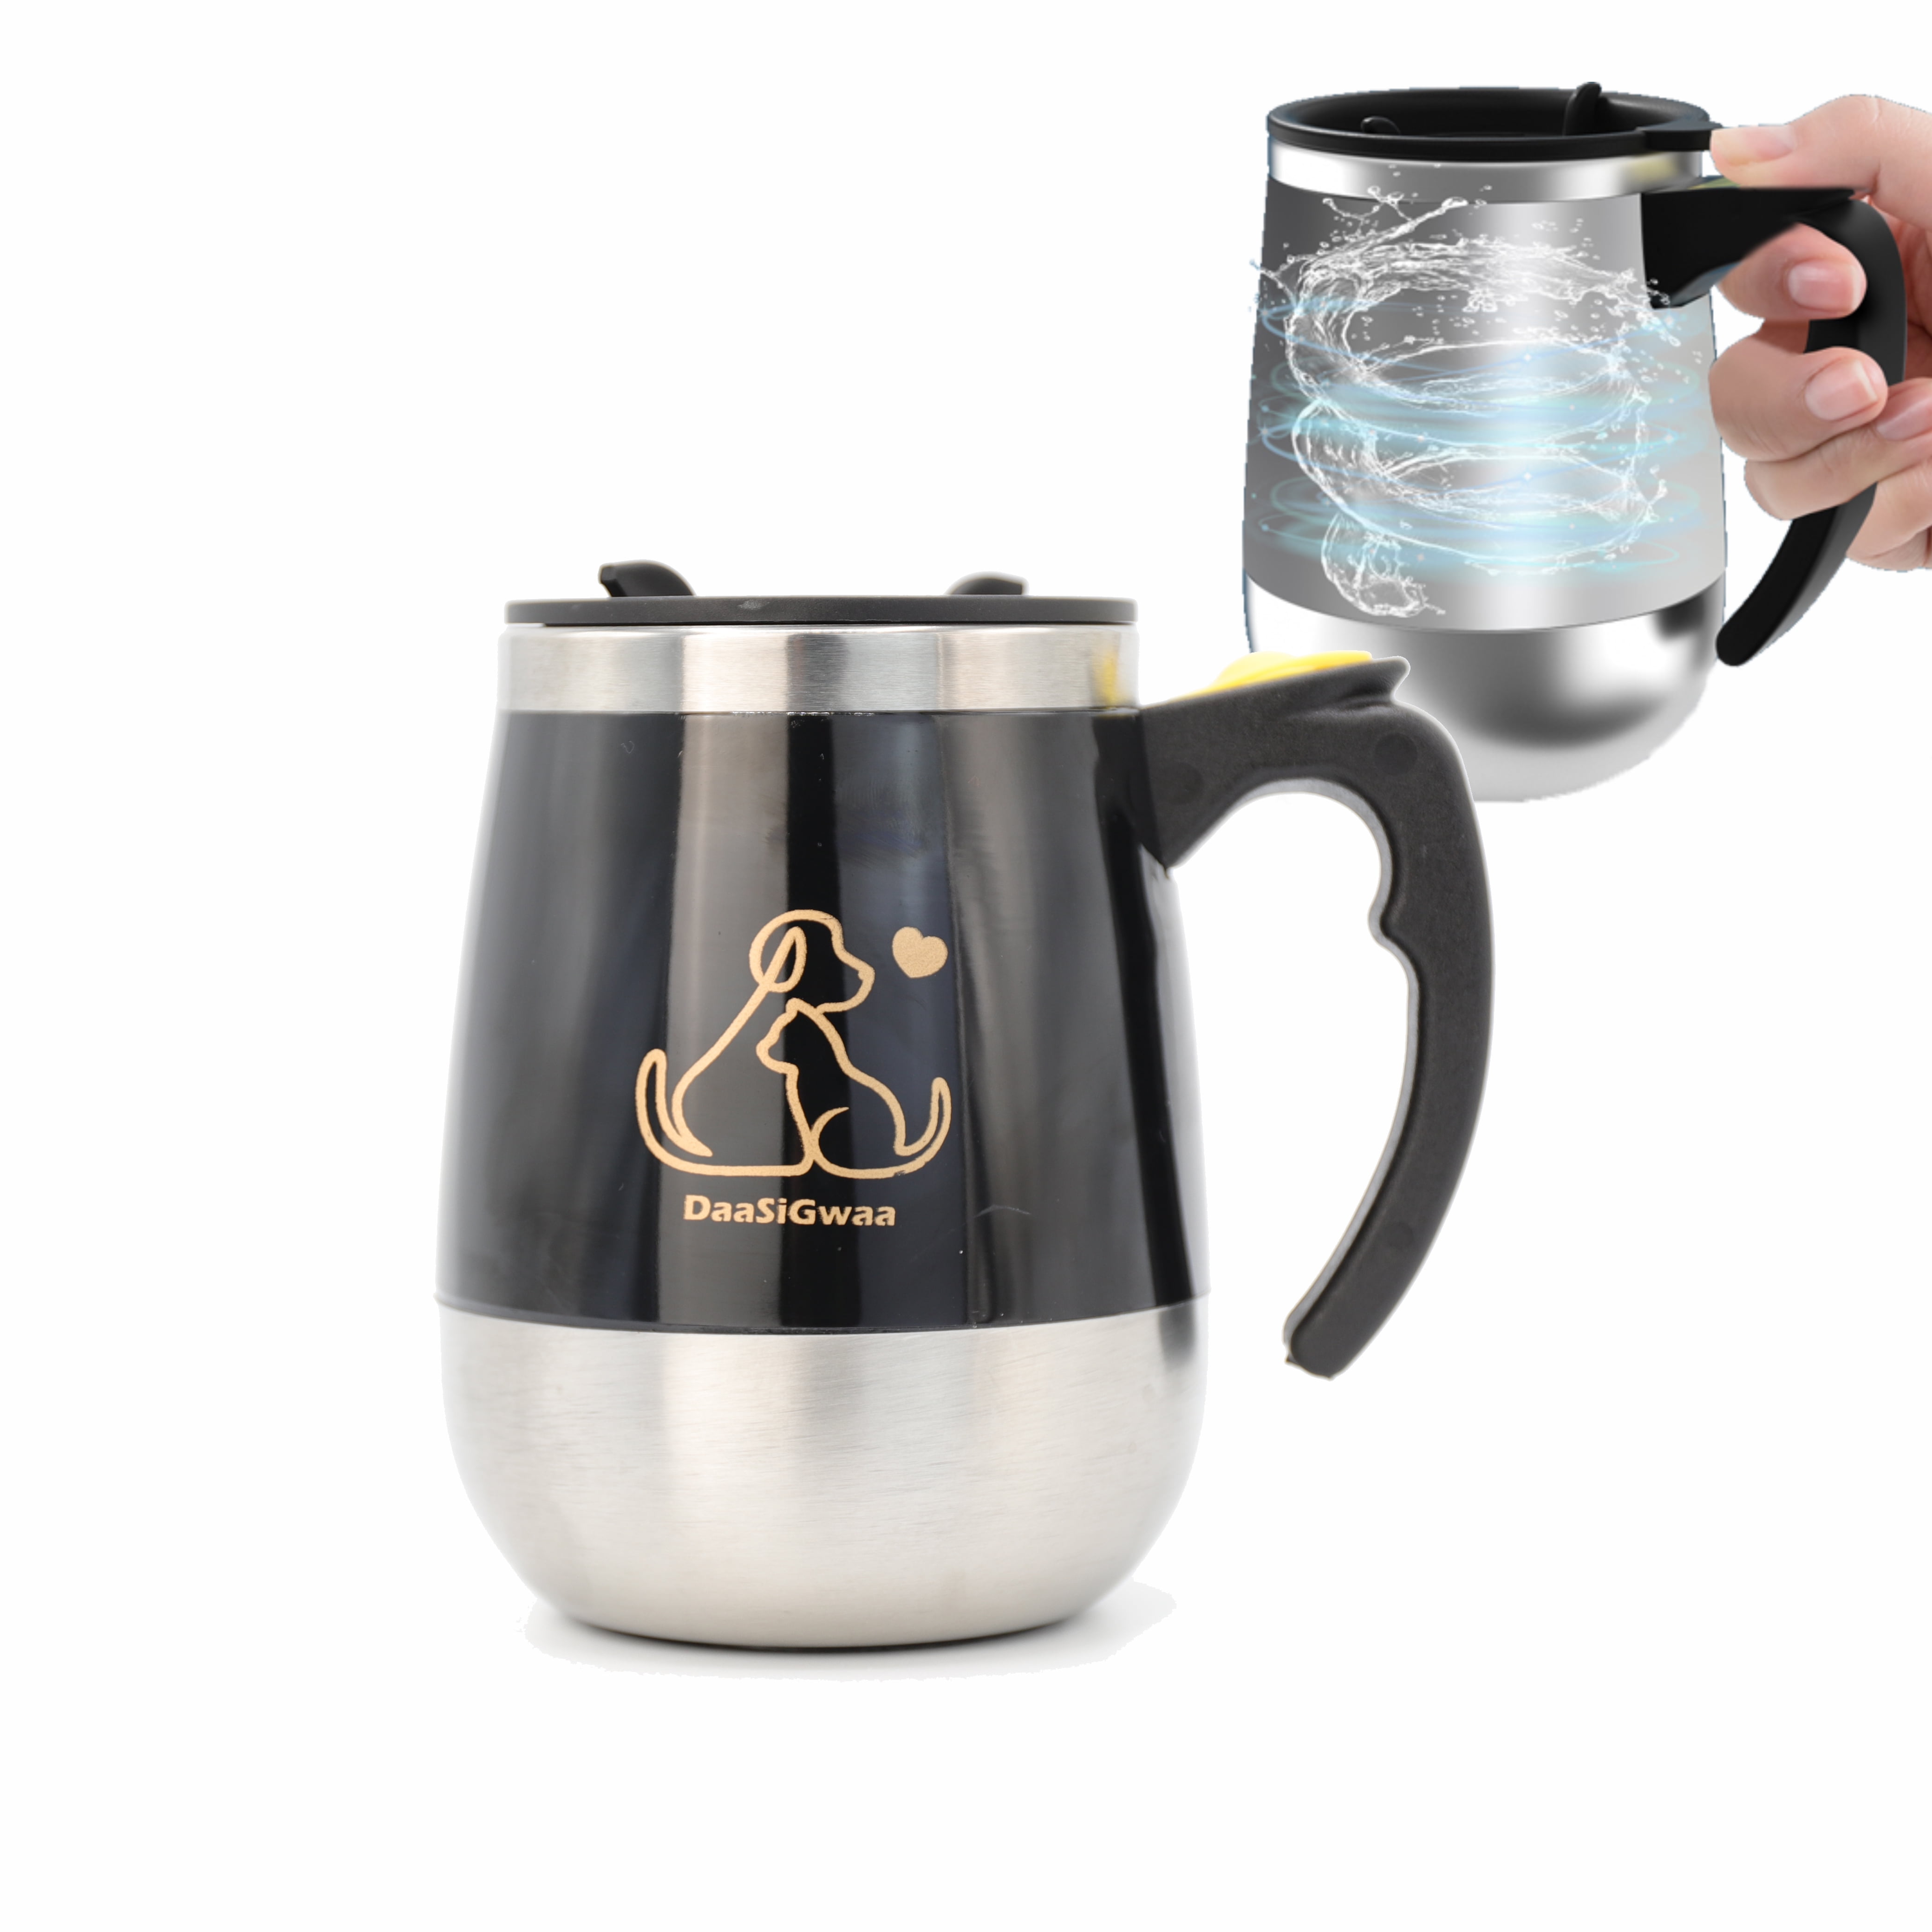 Self Stirring Mug Auto Mixing Cup Black Tea Coffee Milk Magnetic Travel